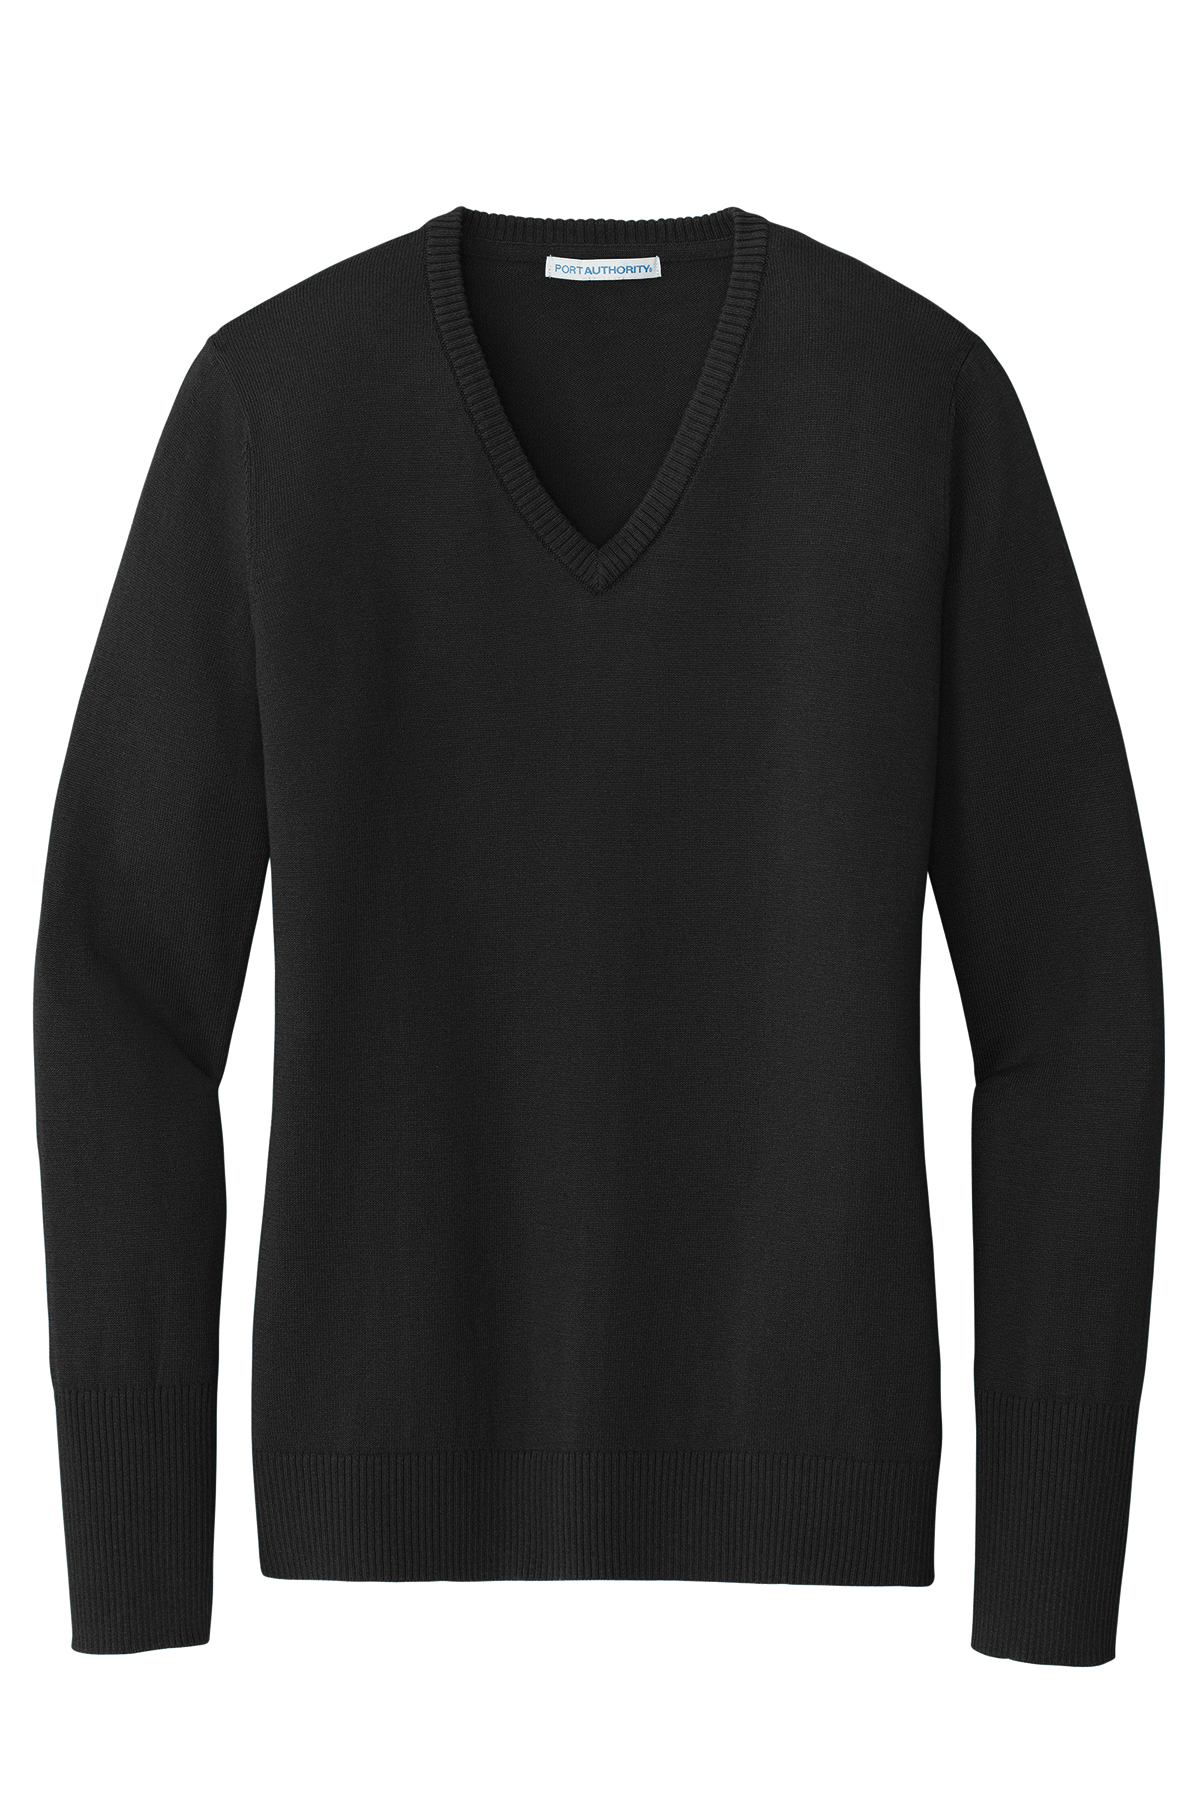 | Ladies | Authority Port V-Neck Port Authority Product Sweater